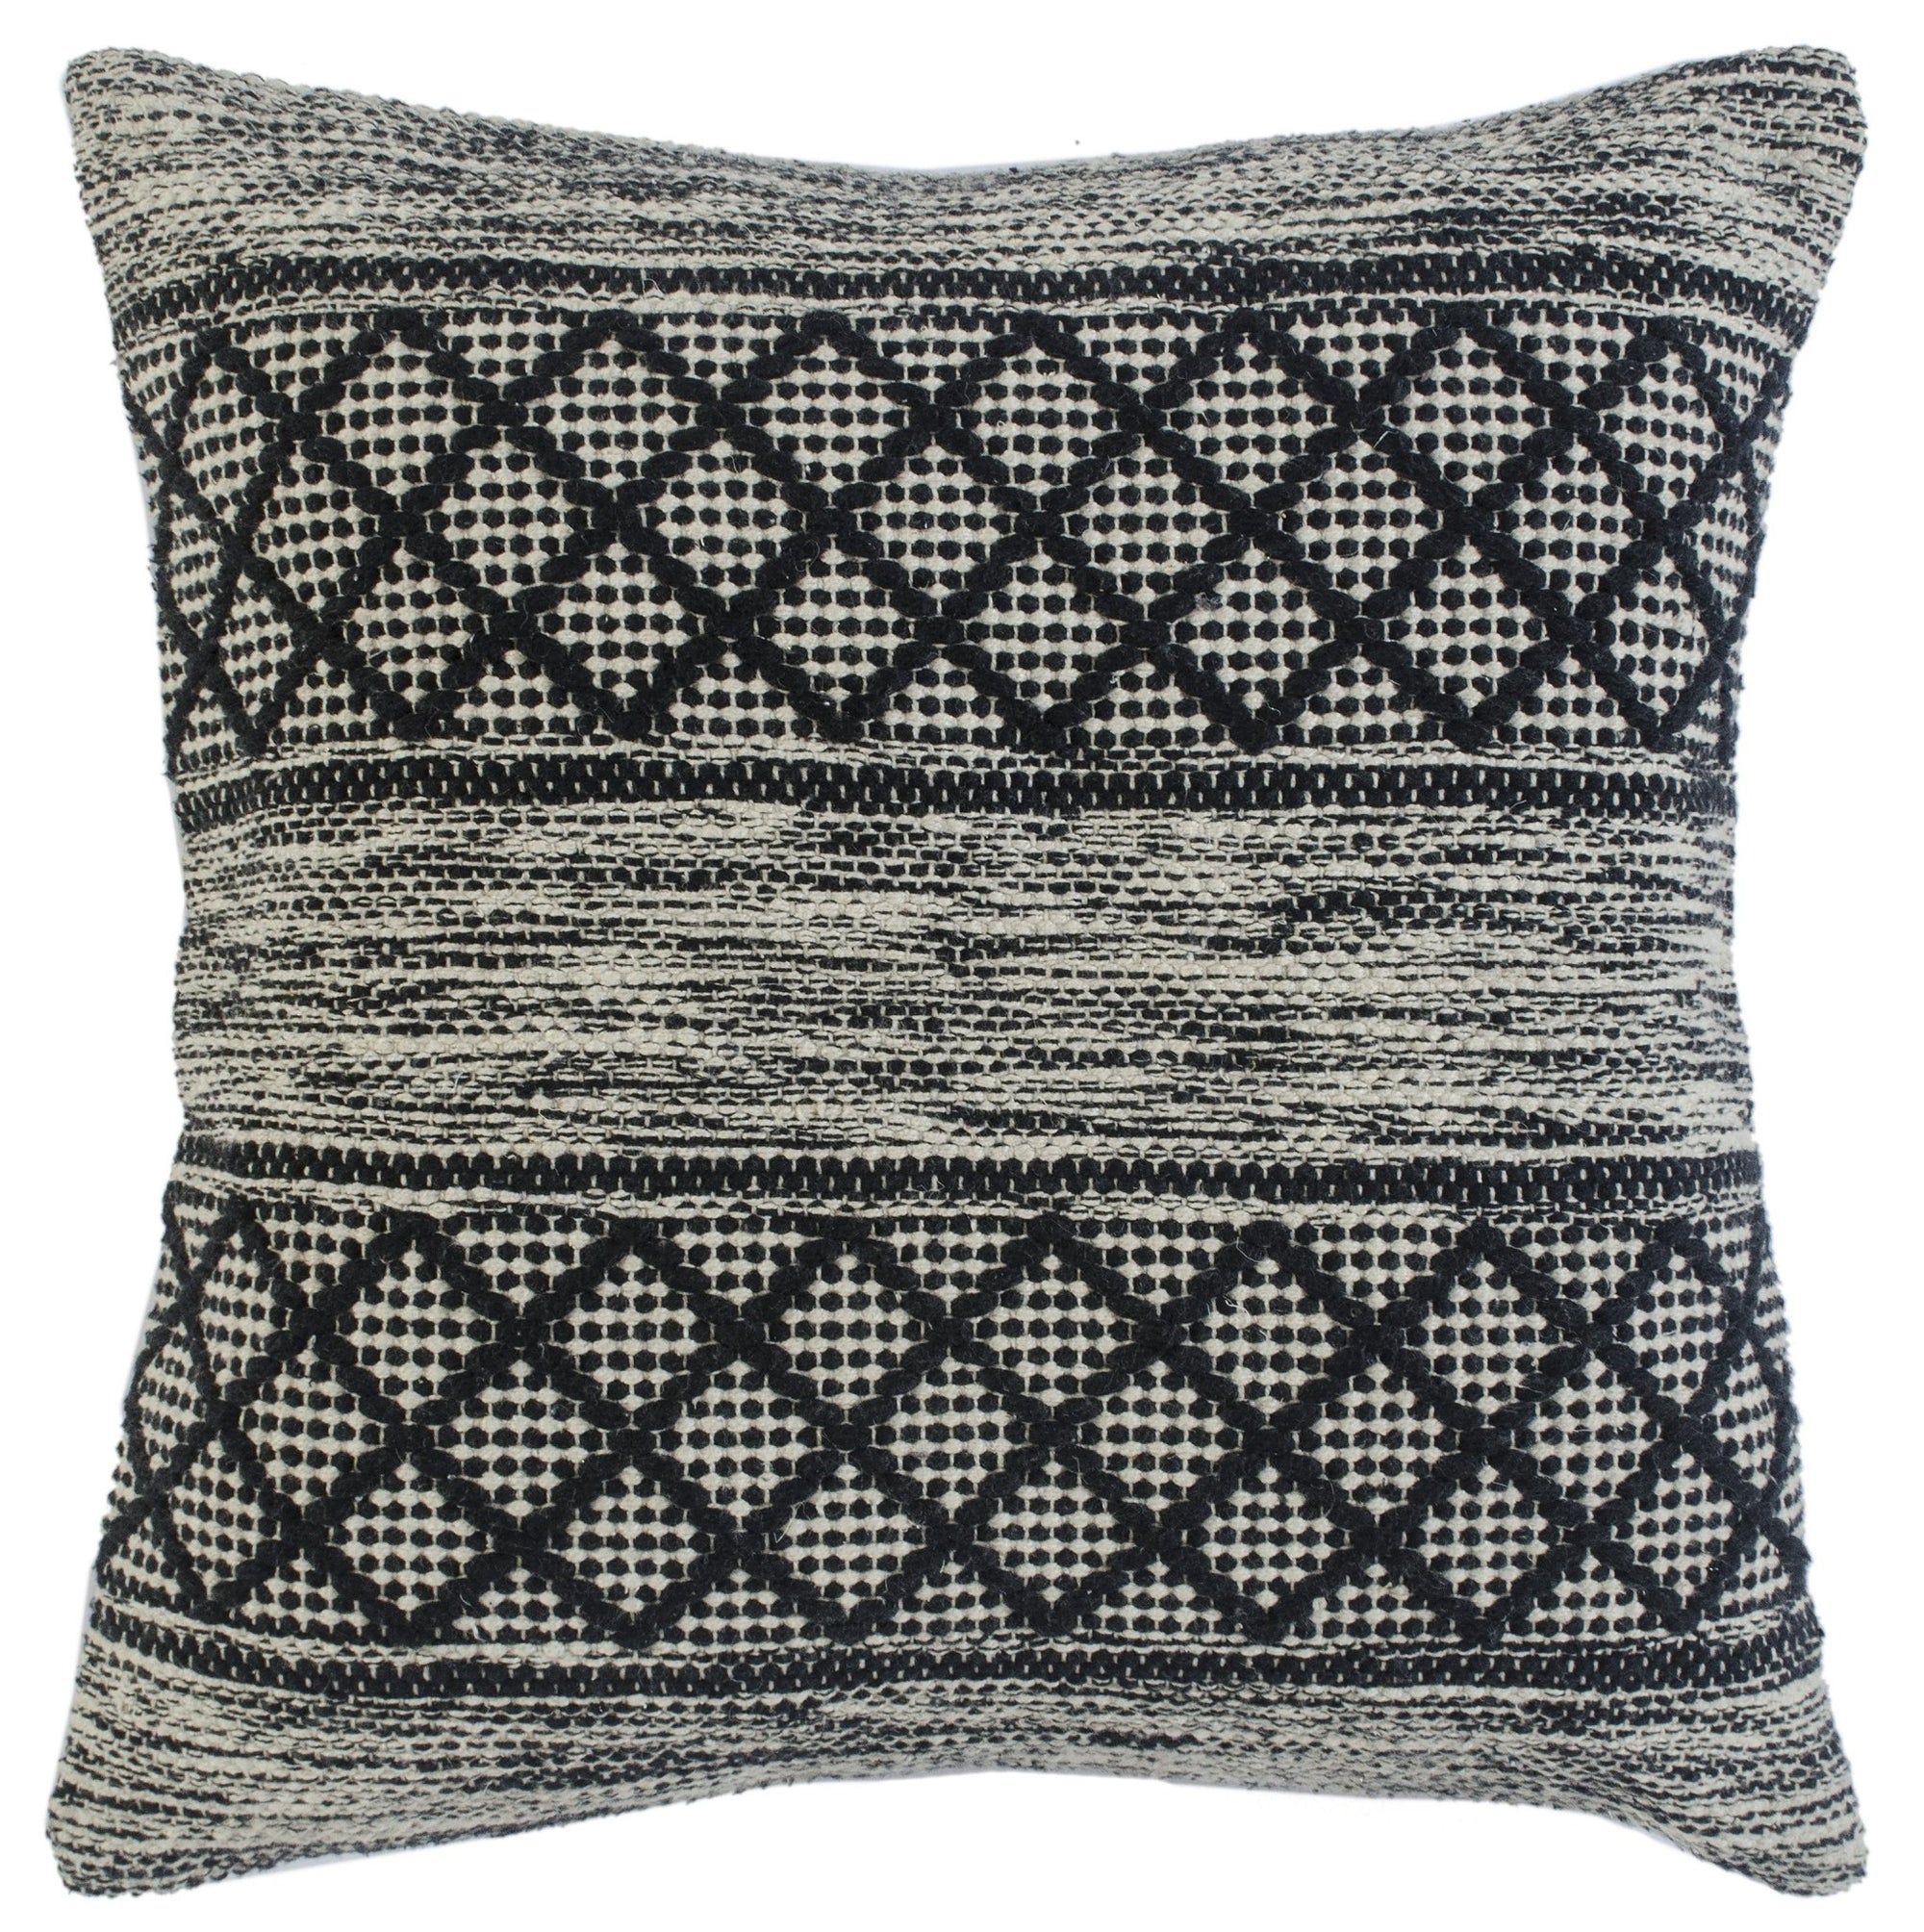 Mindy Lr07616 Gray/Black Pillow - Rug & Home